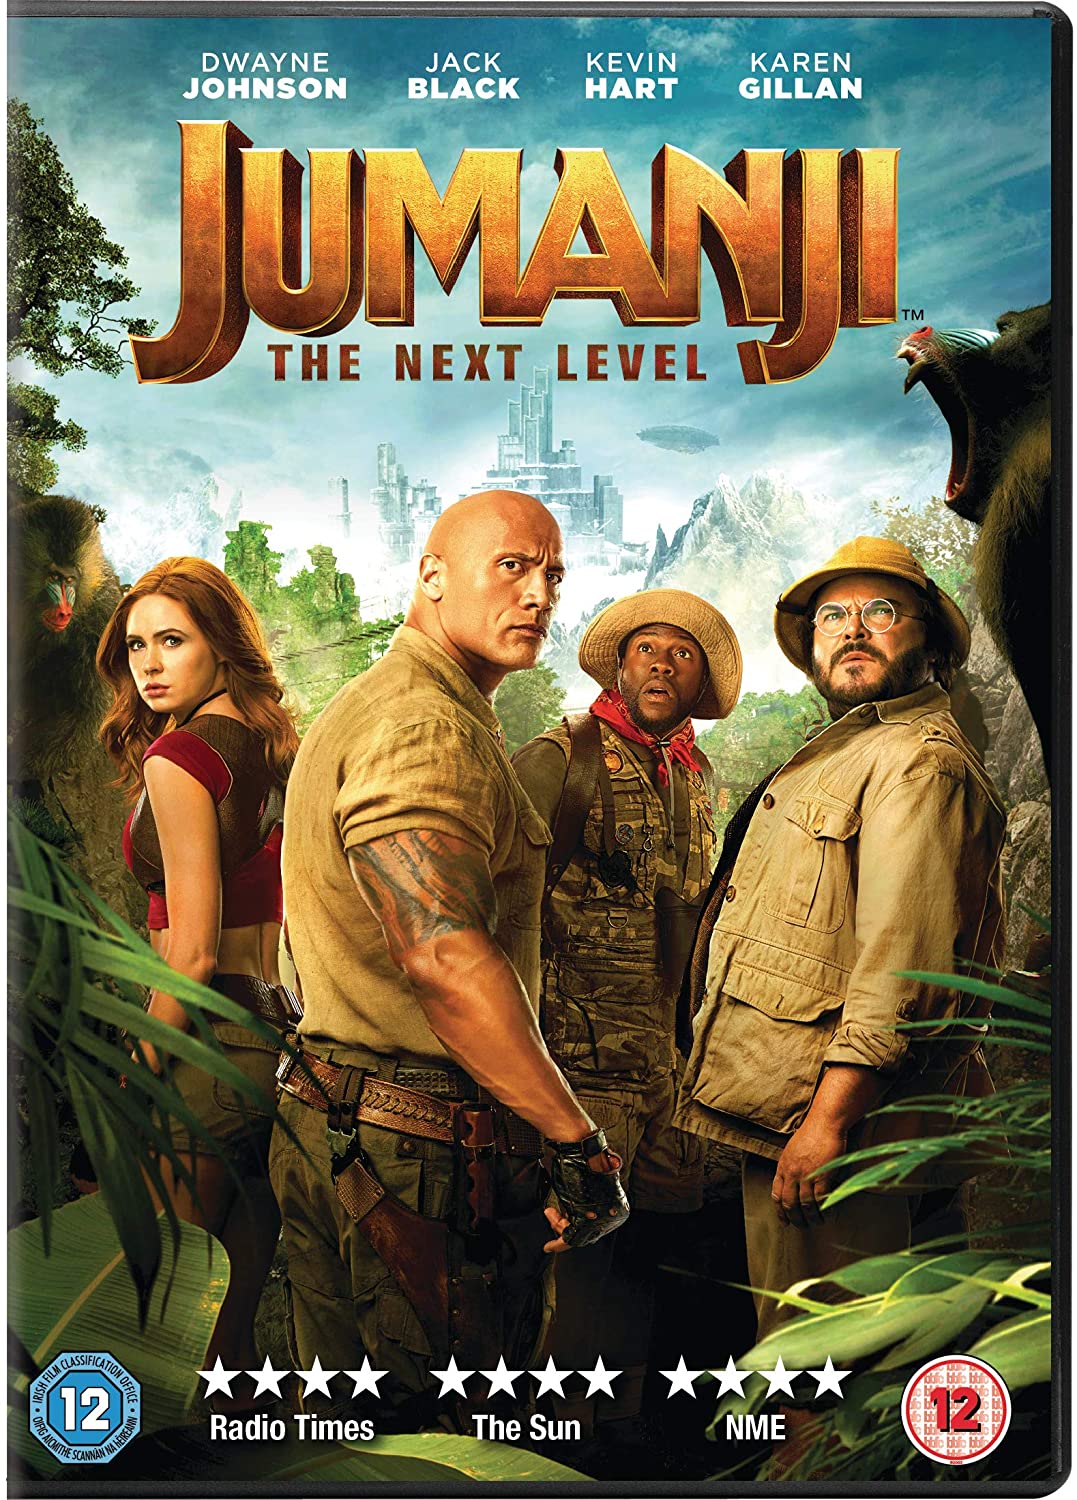 Jumanji: The Next Level - Adventure [DVD]